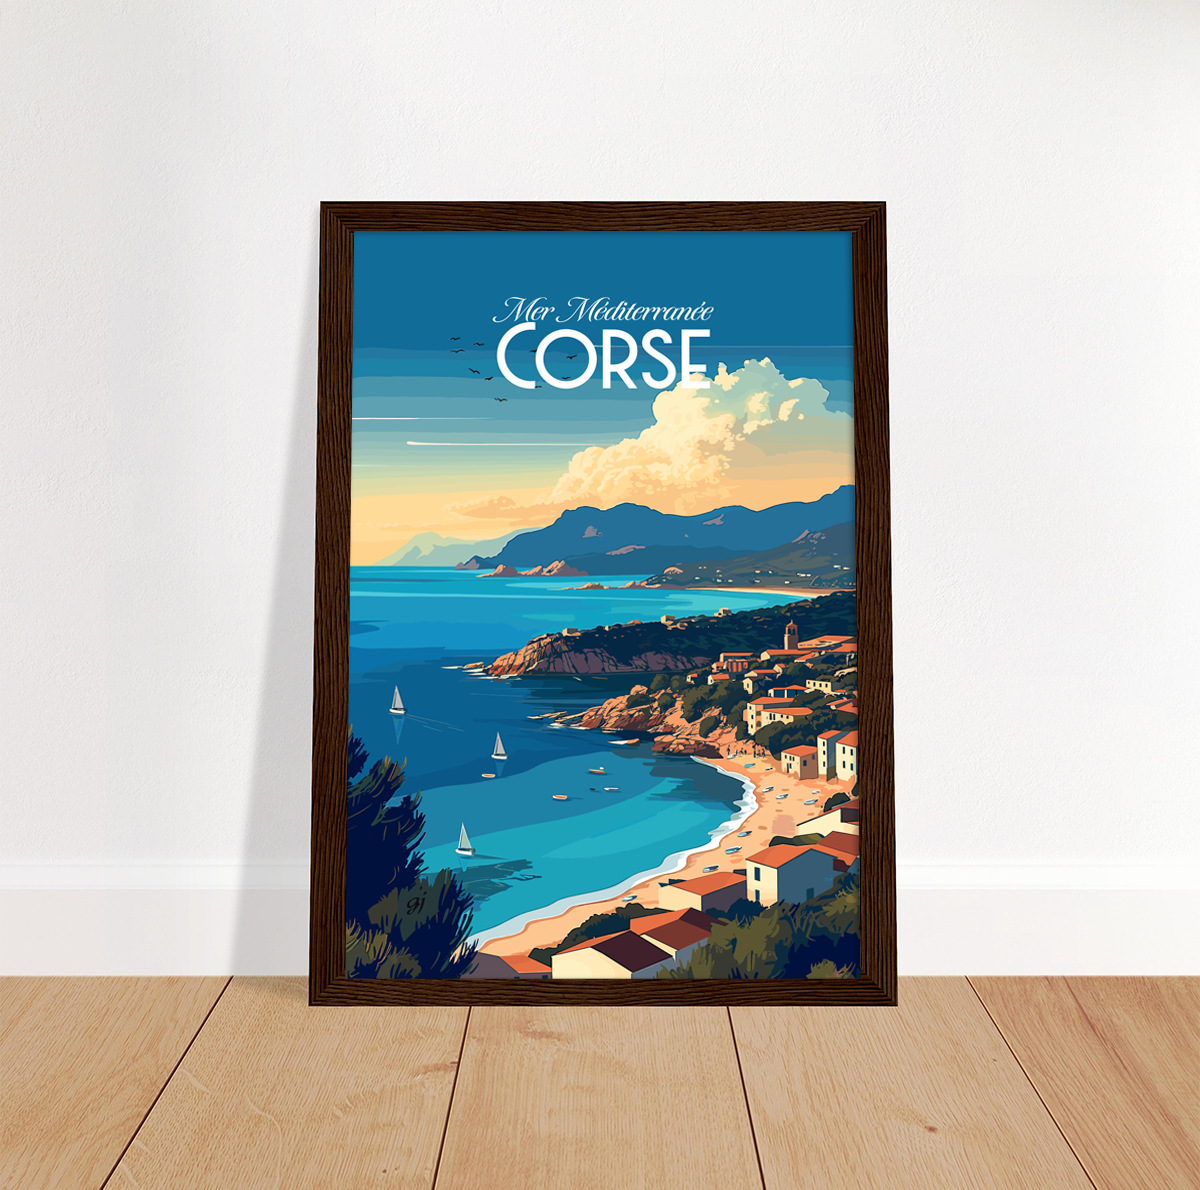 Corse - Plage poster by bon voyage design